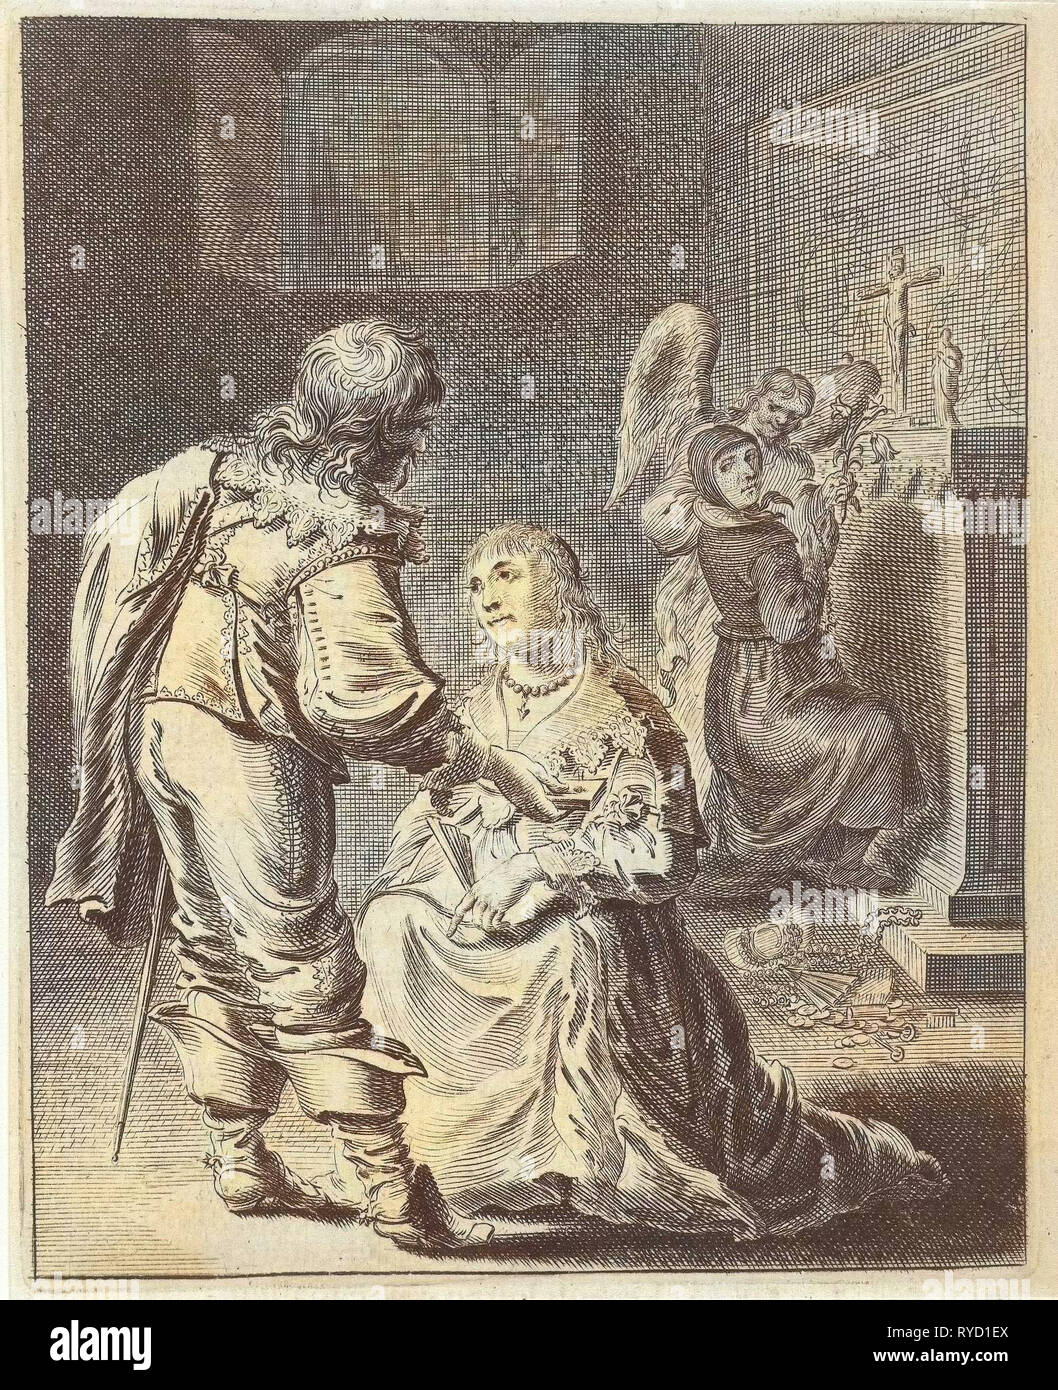 Purity and vanity, Pieter Nolpe, 1640 Stock Photo